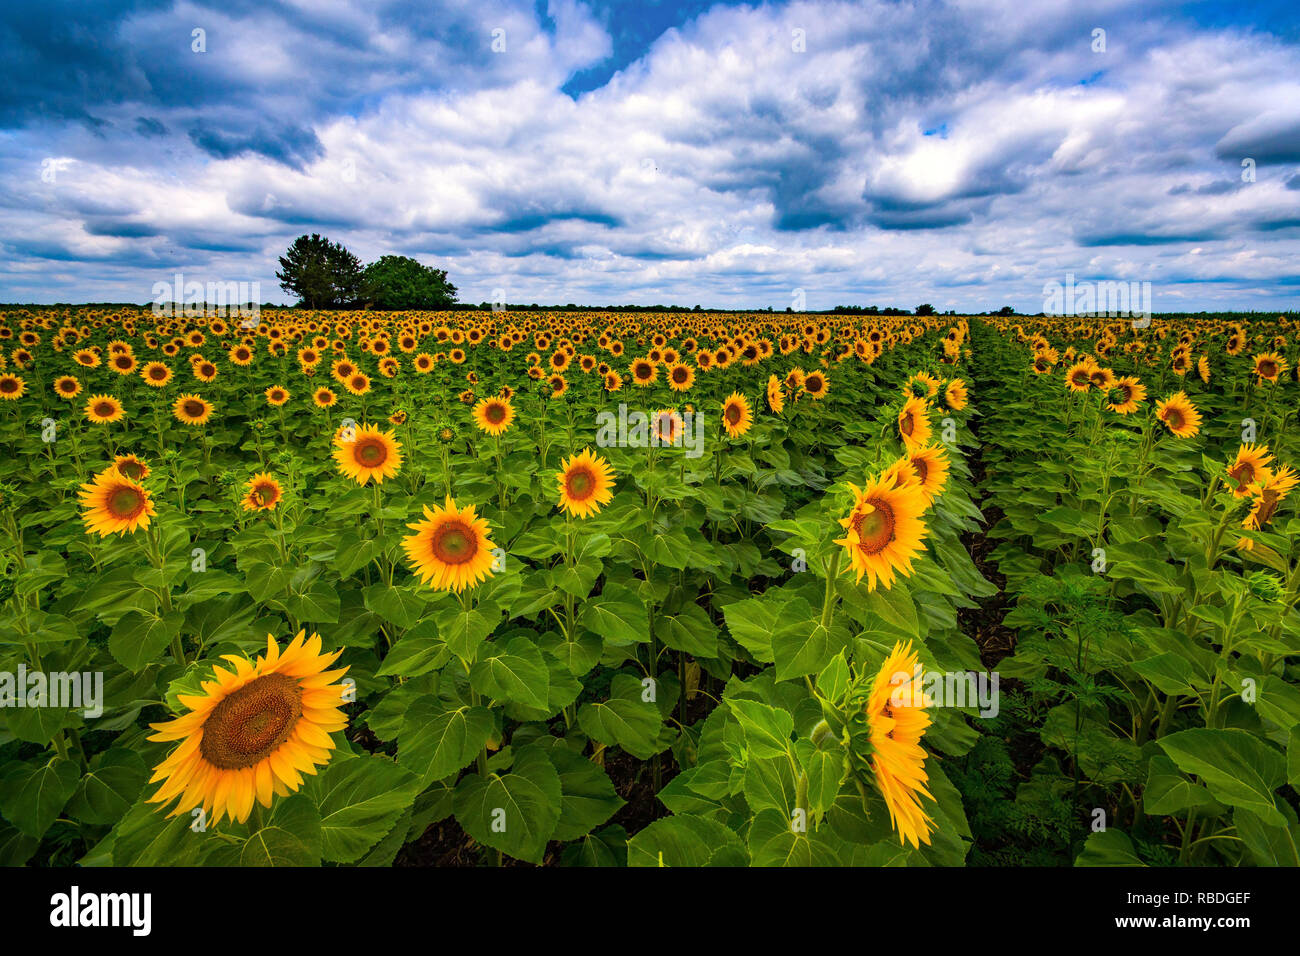 Vibrant sunflower field in summer Stock Photo